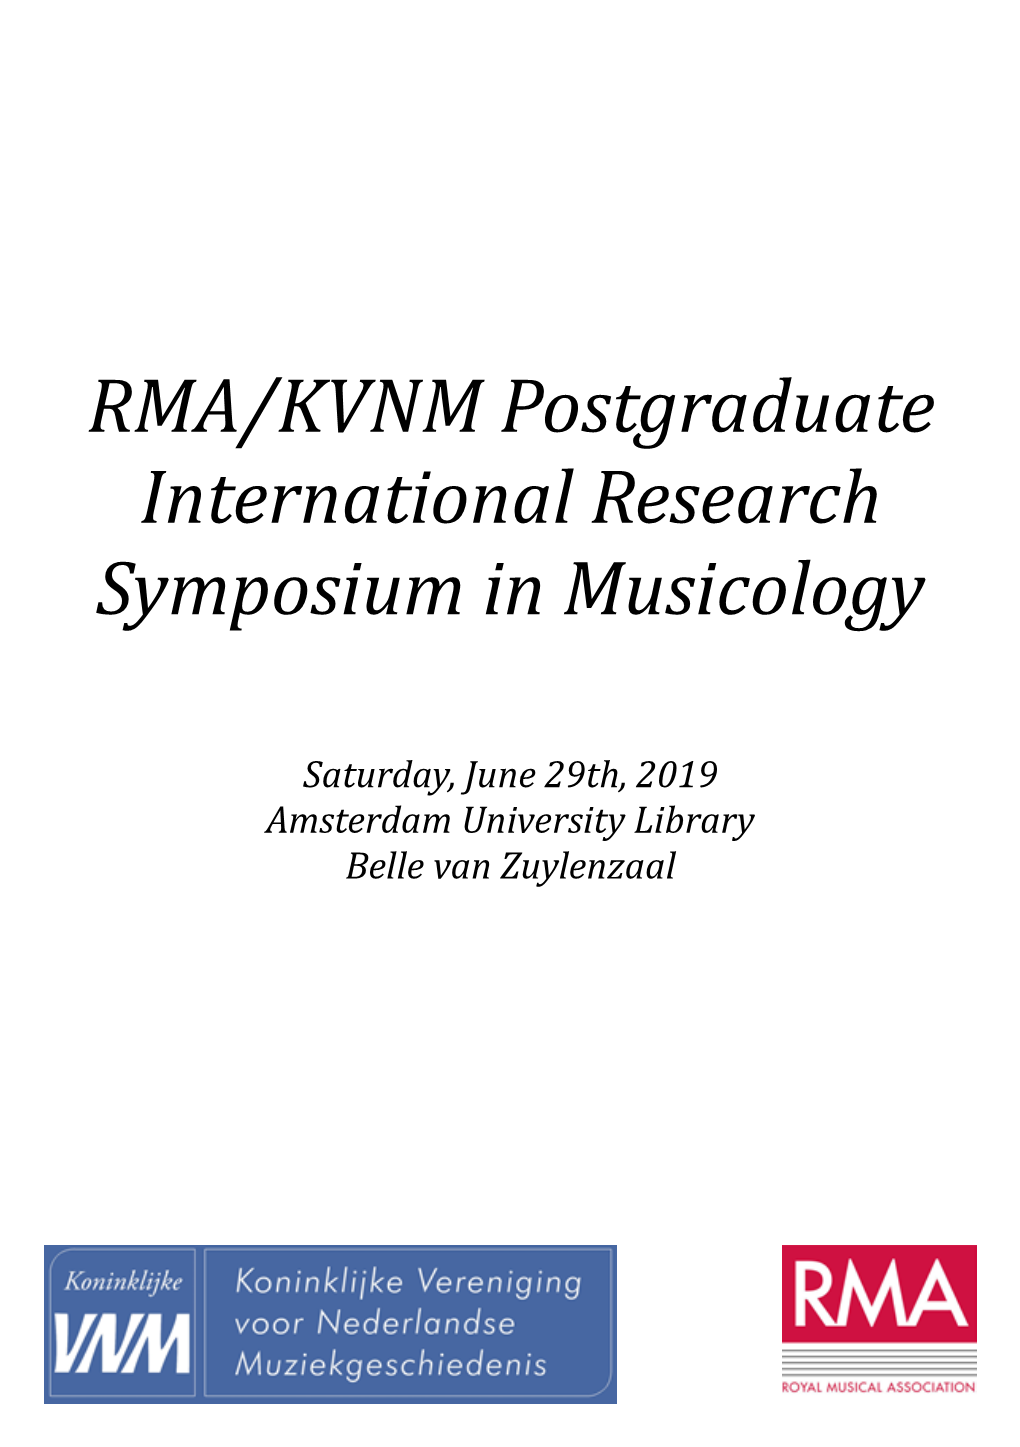 RMA/KVNM Postgraduate International Research Symposium in Musicology